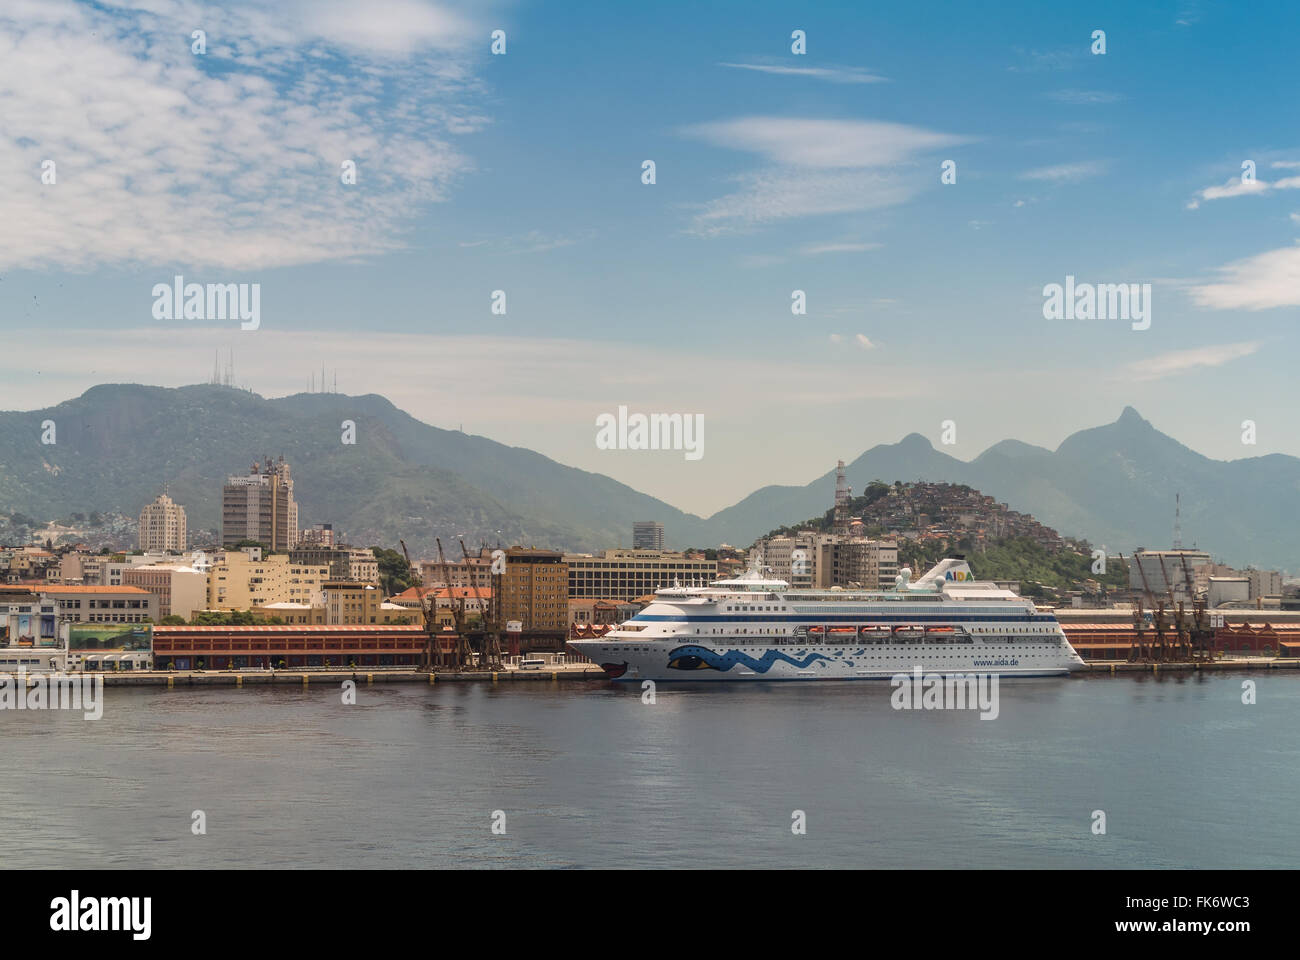 Cruise Ship Aida Cara brings passengers to the Rio de Janeiro, Brazil. Stock Photo